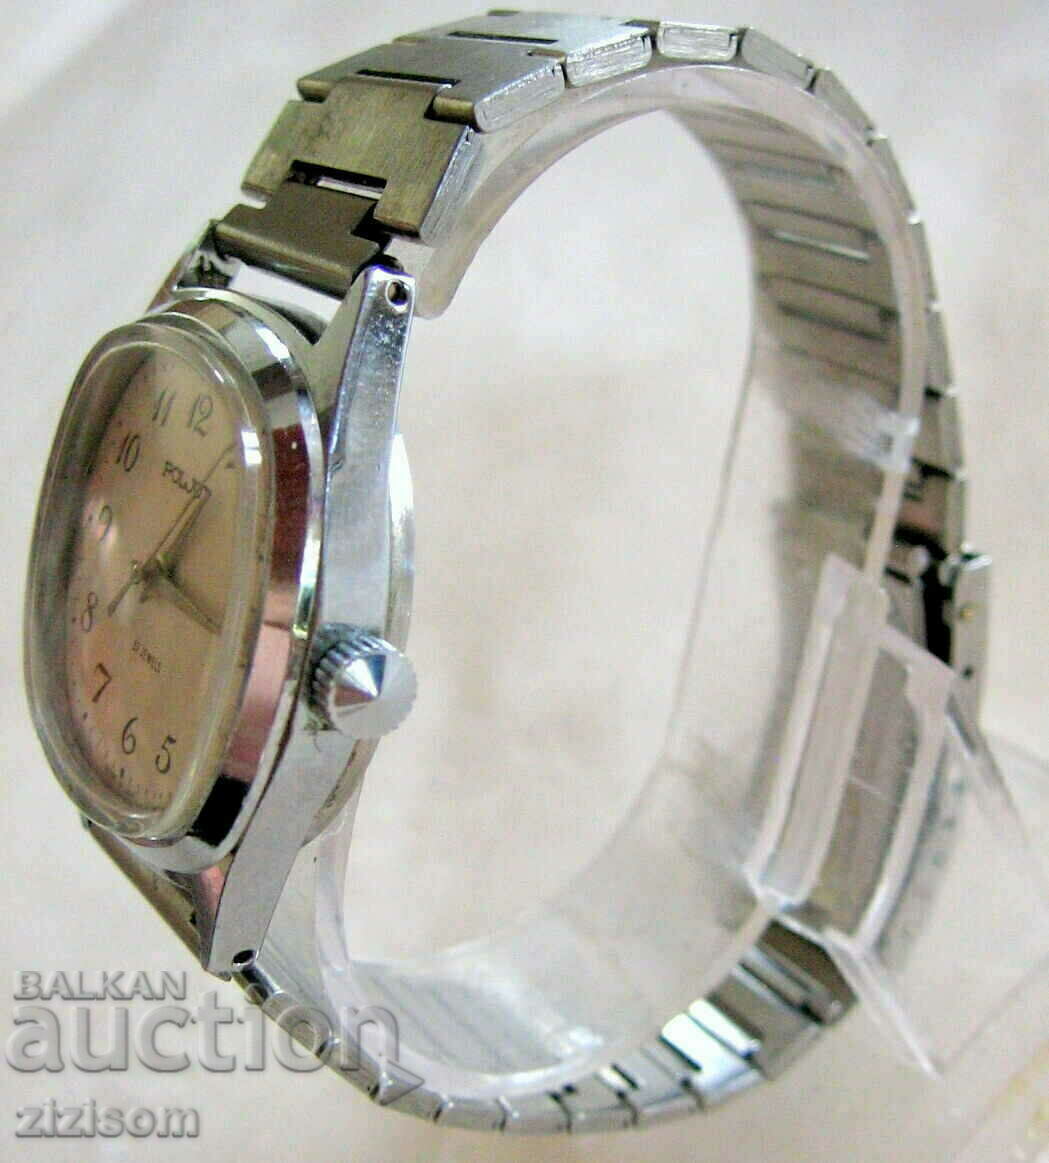 Wrist watch Poljot 17 stones, DATNIK original chain